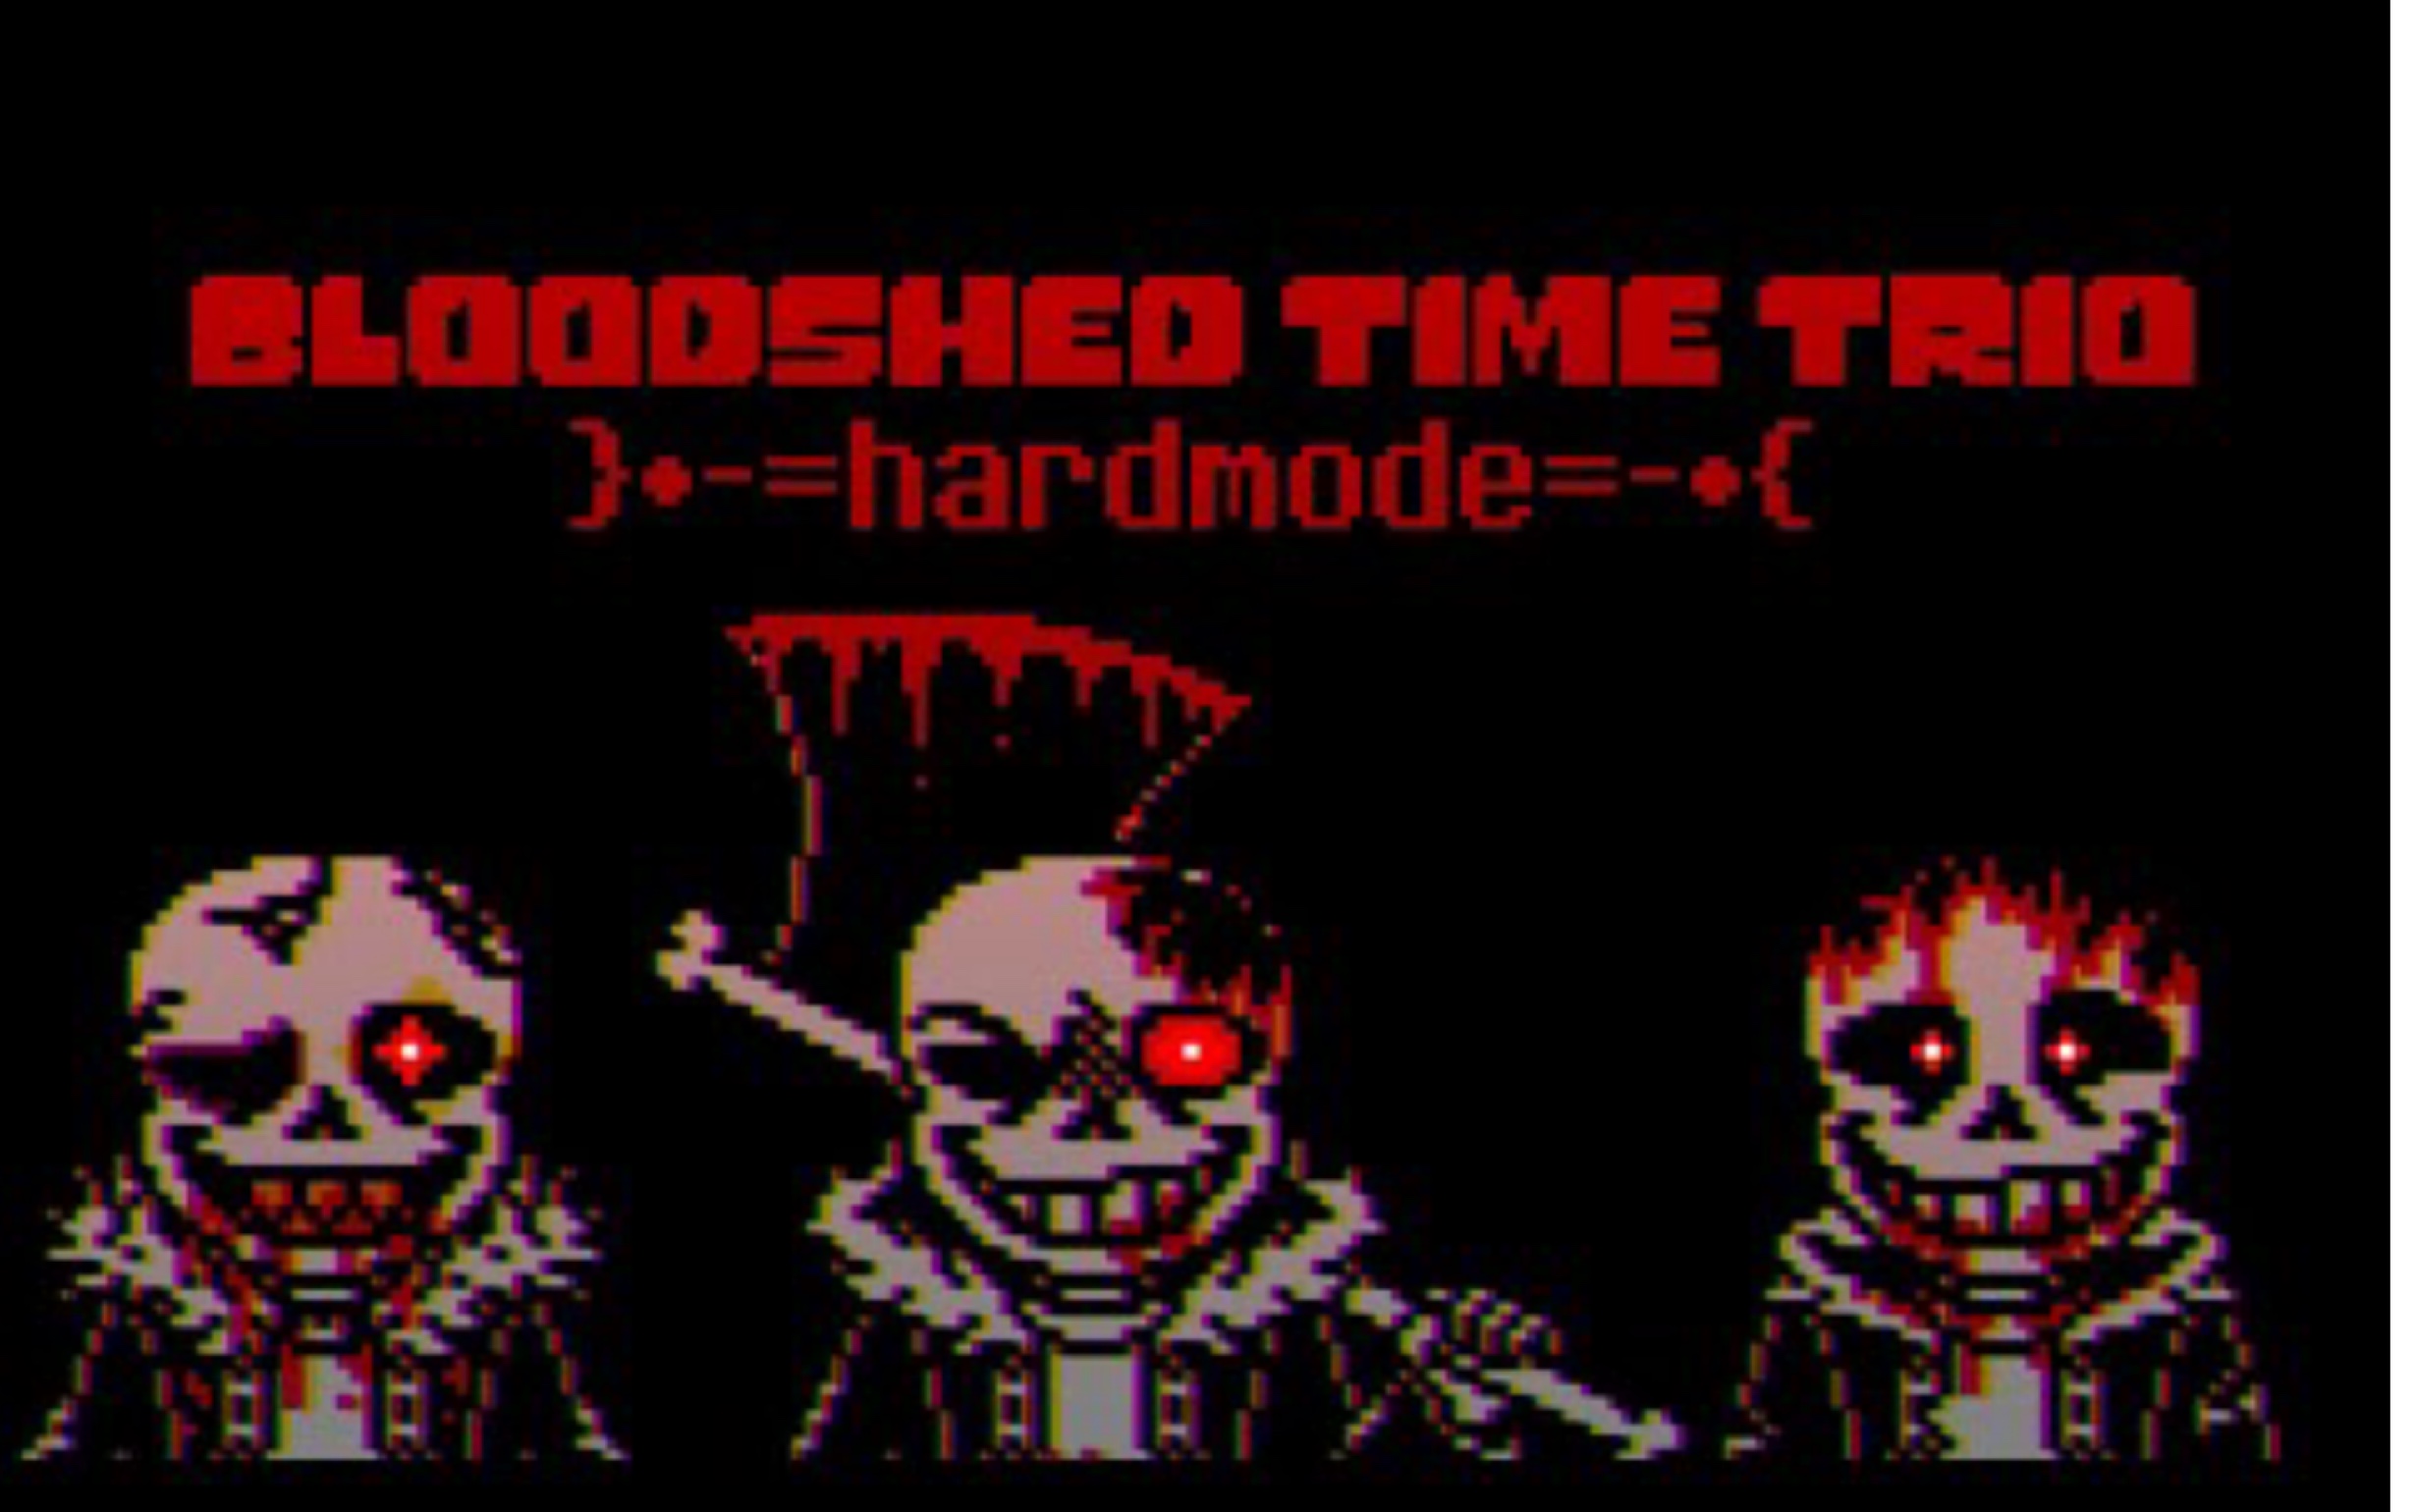 Bloodshed Time Trio Hardmode (official) 「三重血腥时光困难模式 官方」